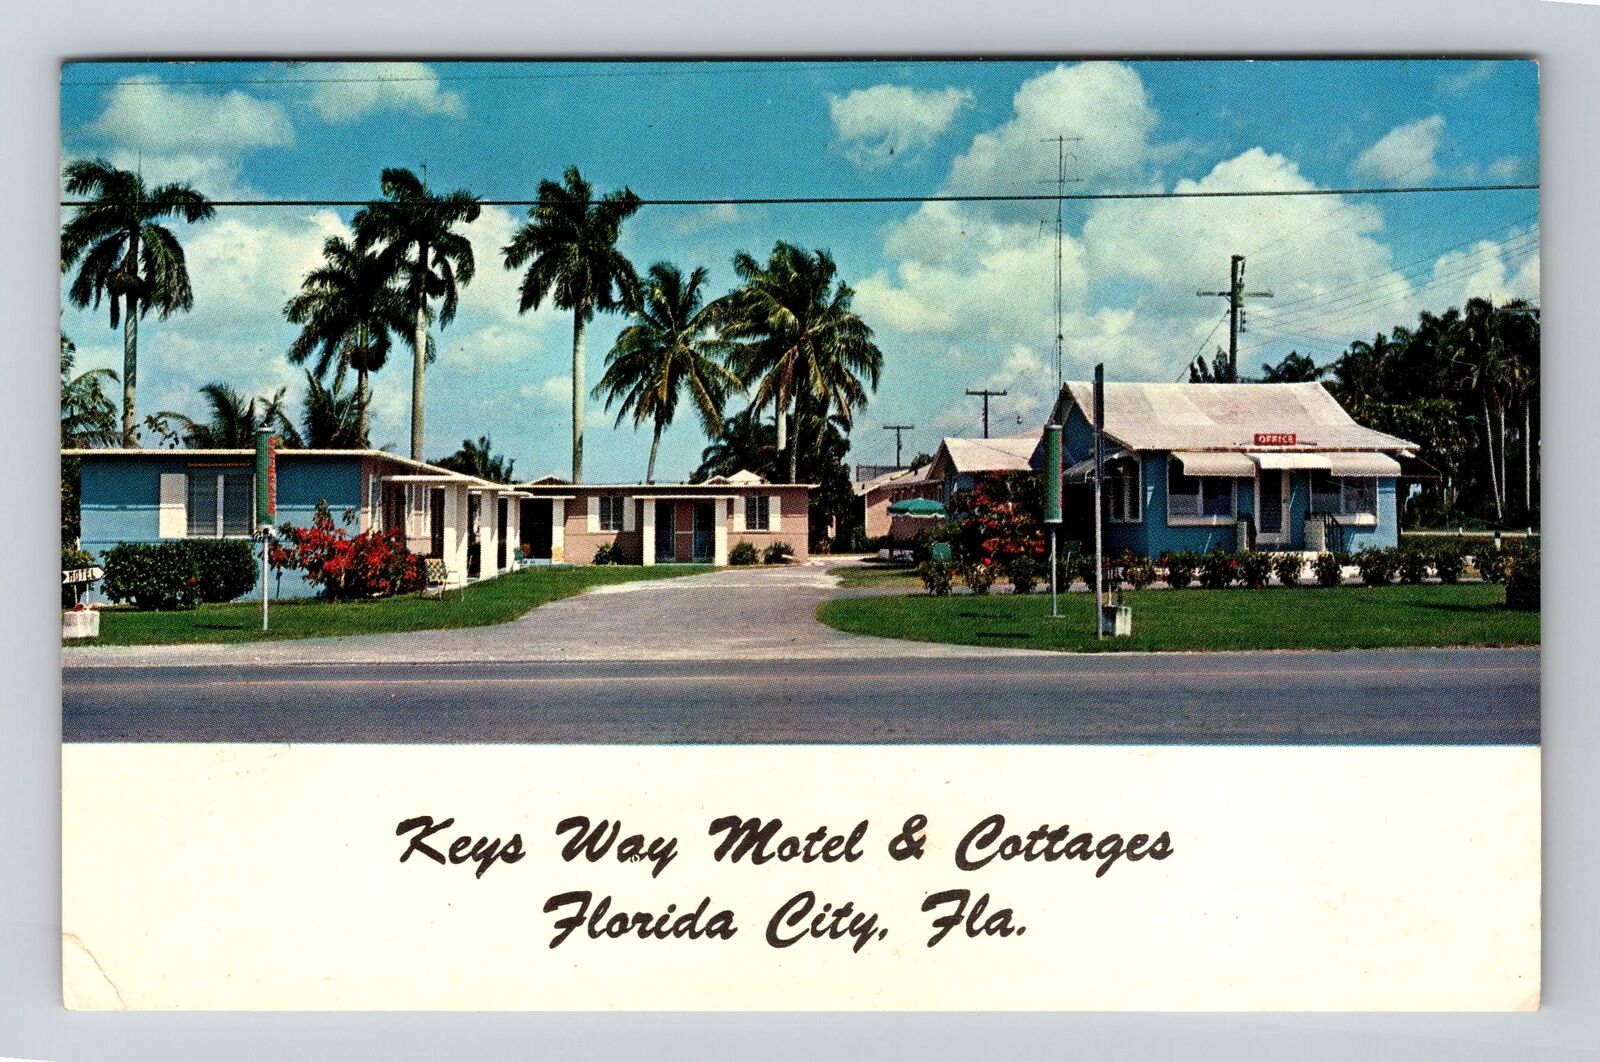 Florida City FL-Florida, Keys Way Motel & Cottages, Vintage Postcard